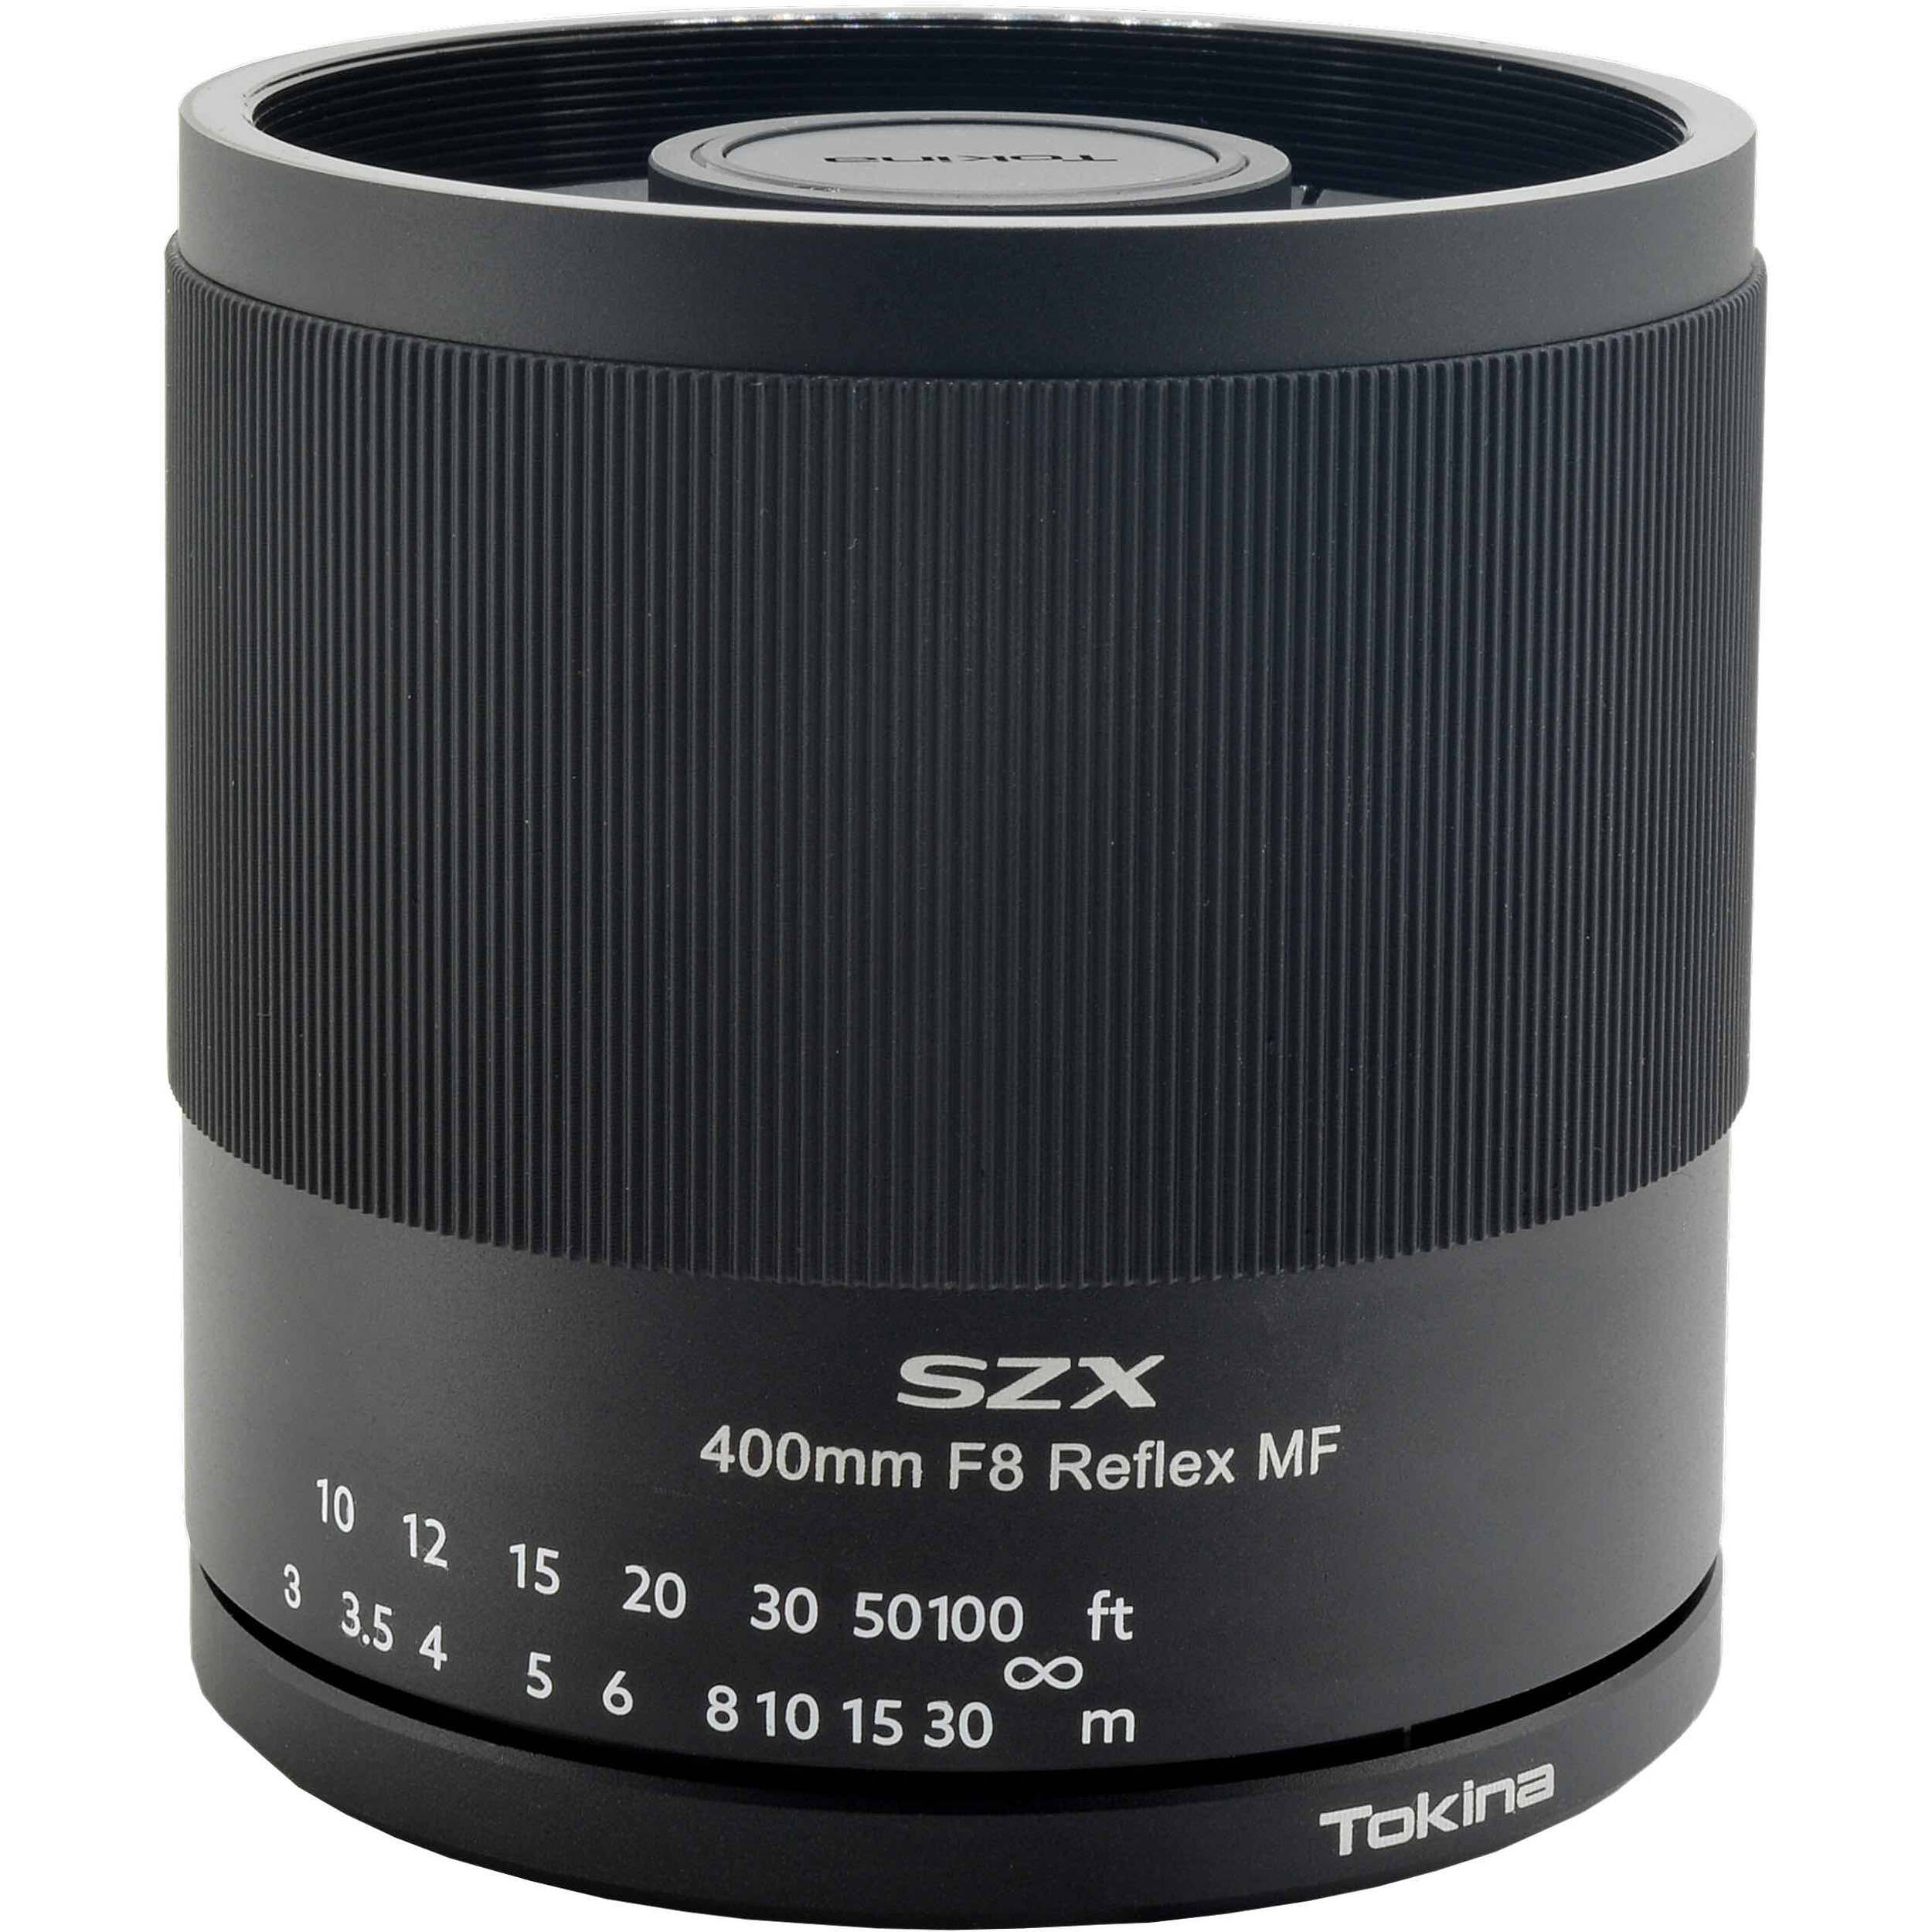 Lente Tokina SZX SUPER TELE 400mm F8 Reflex MF, Full Frame, para Nikon F